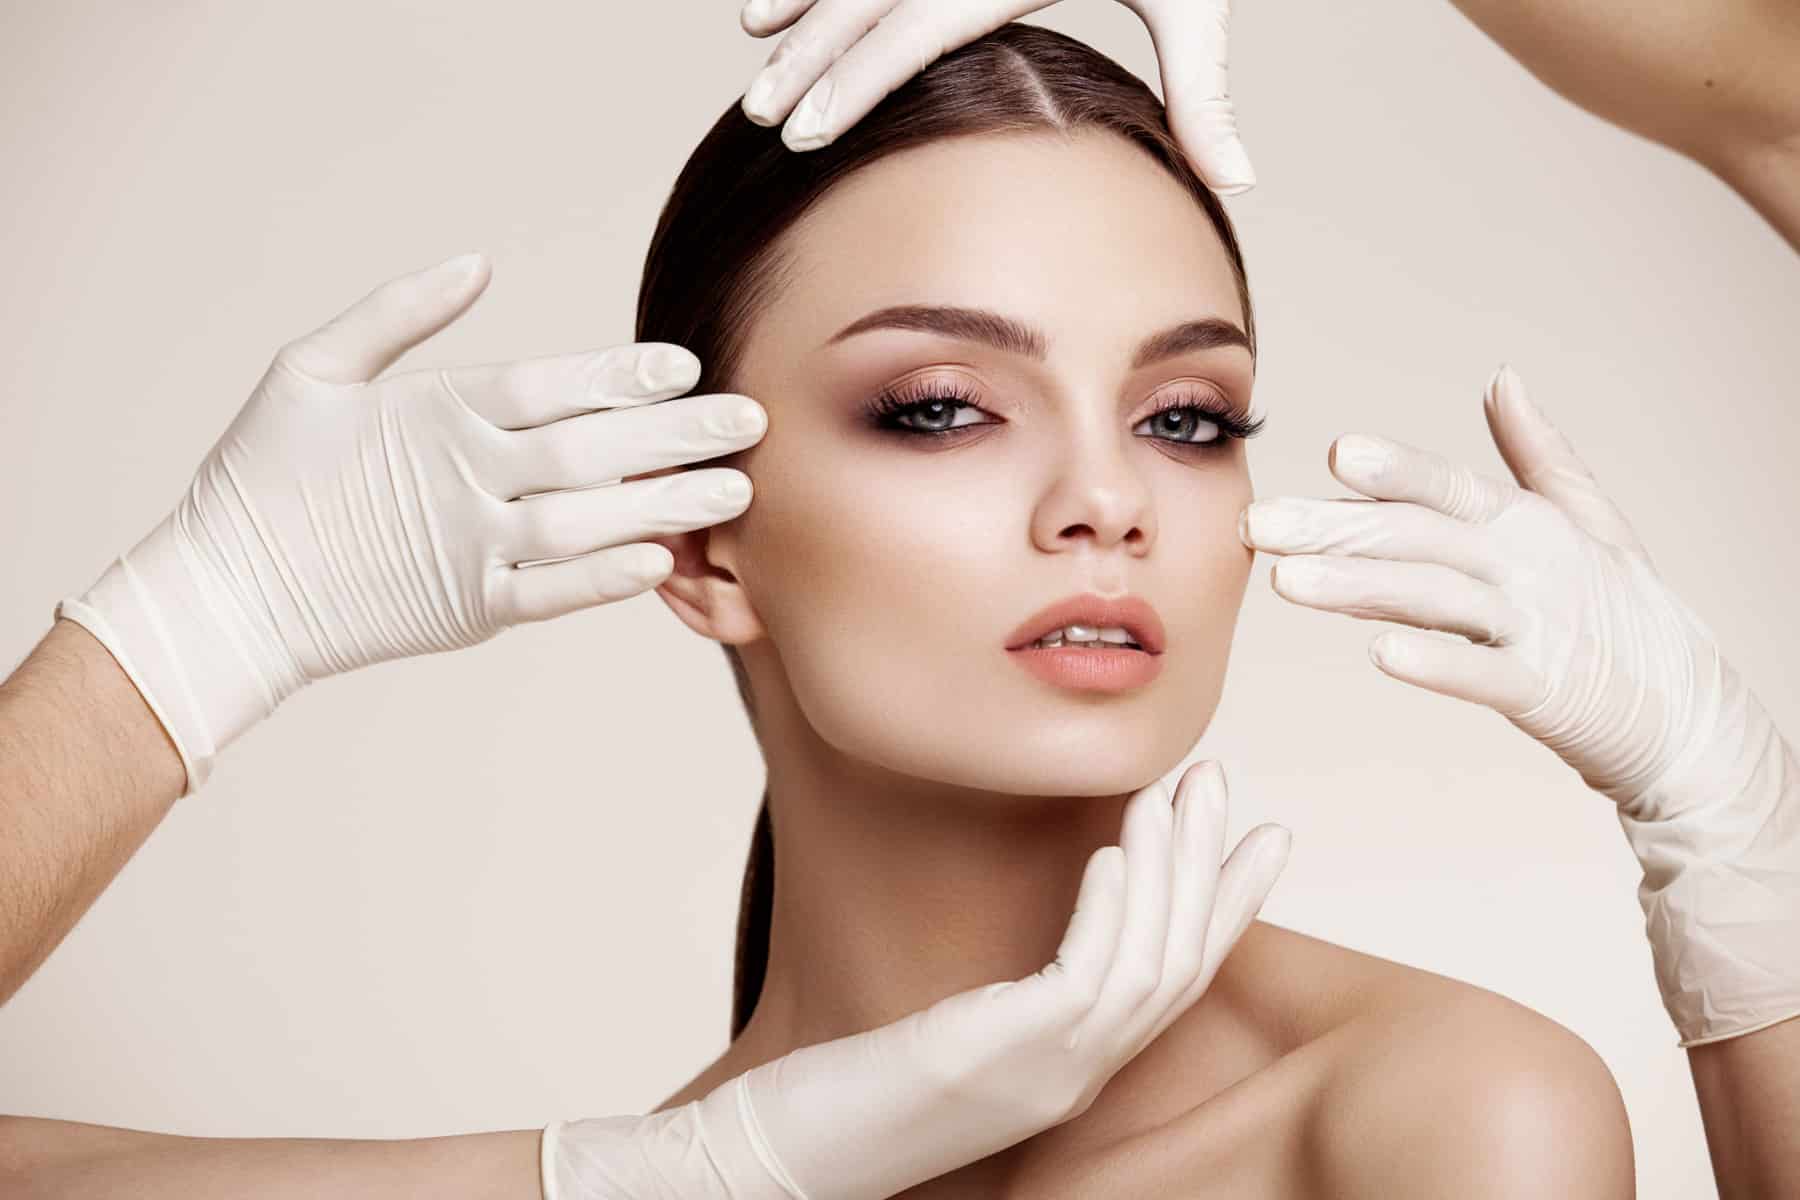 Non-Surgical Cosmetic Procedures to Balance Your Facial Profile